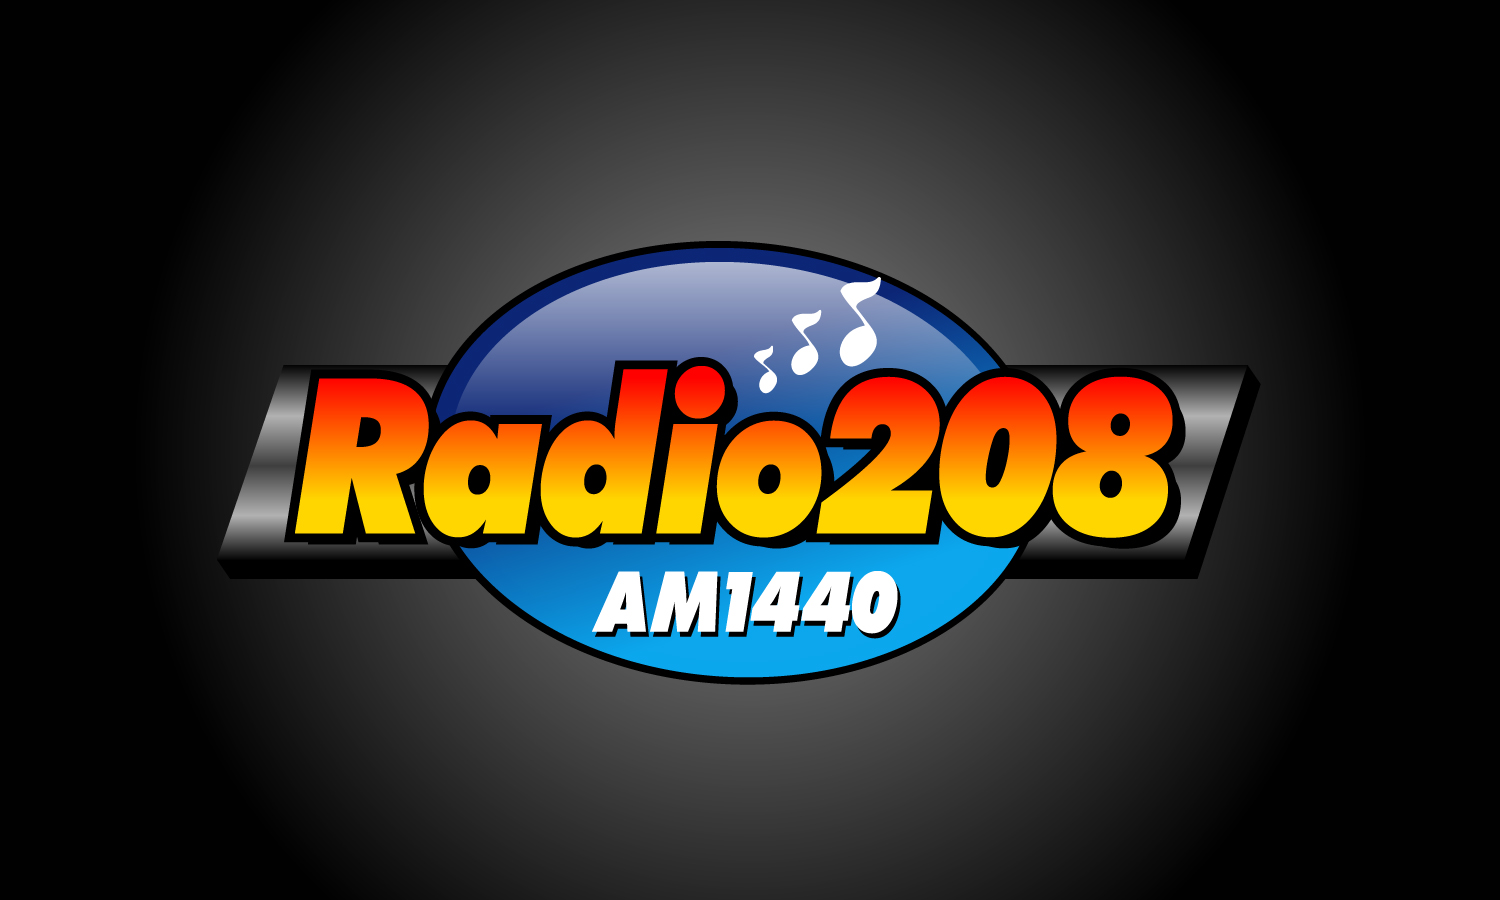 Radio208 logo